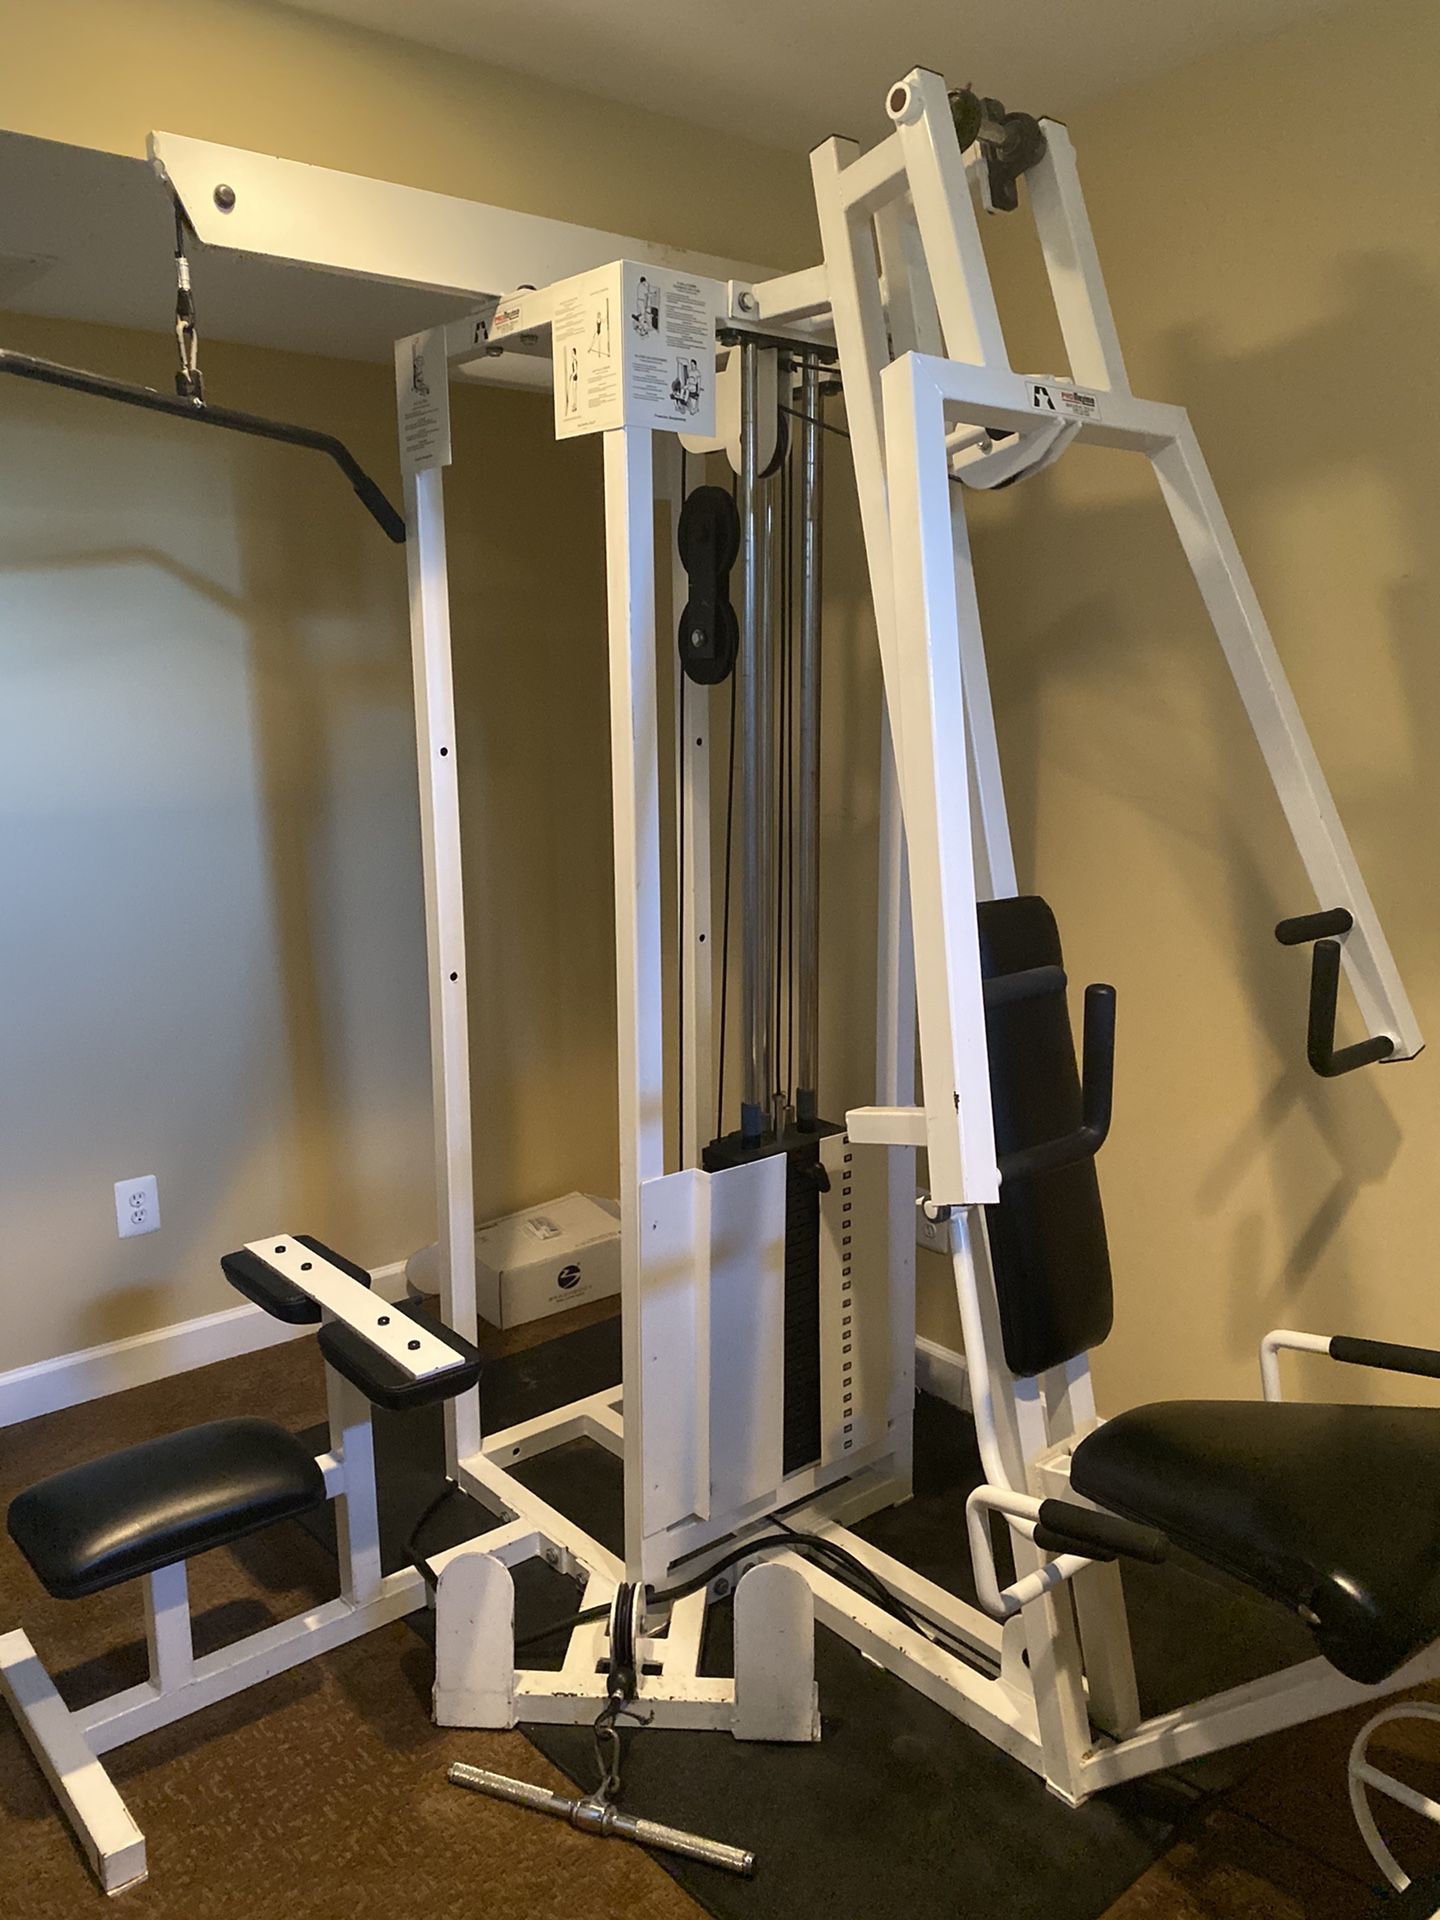 Pro Maxima gym equipment/set